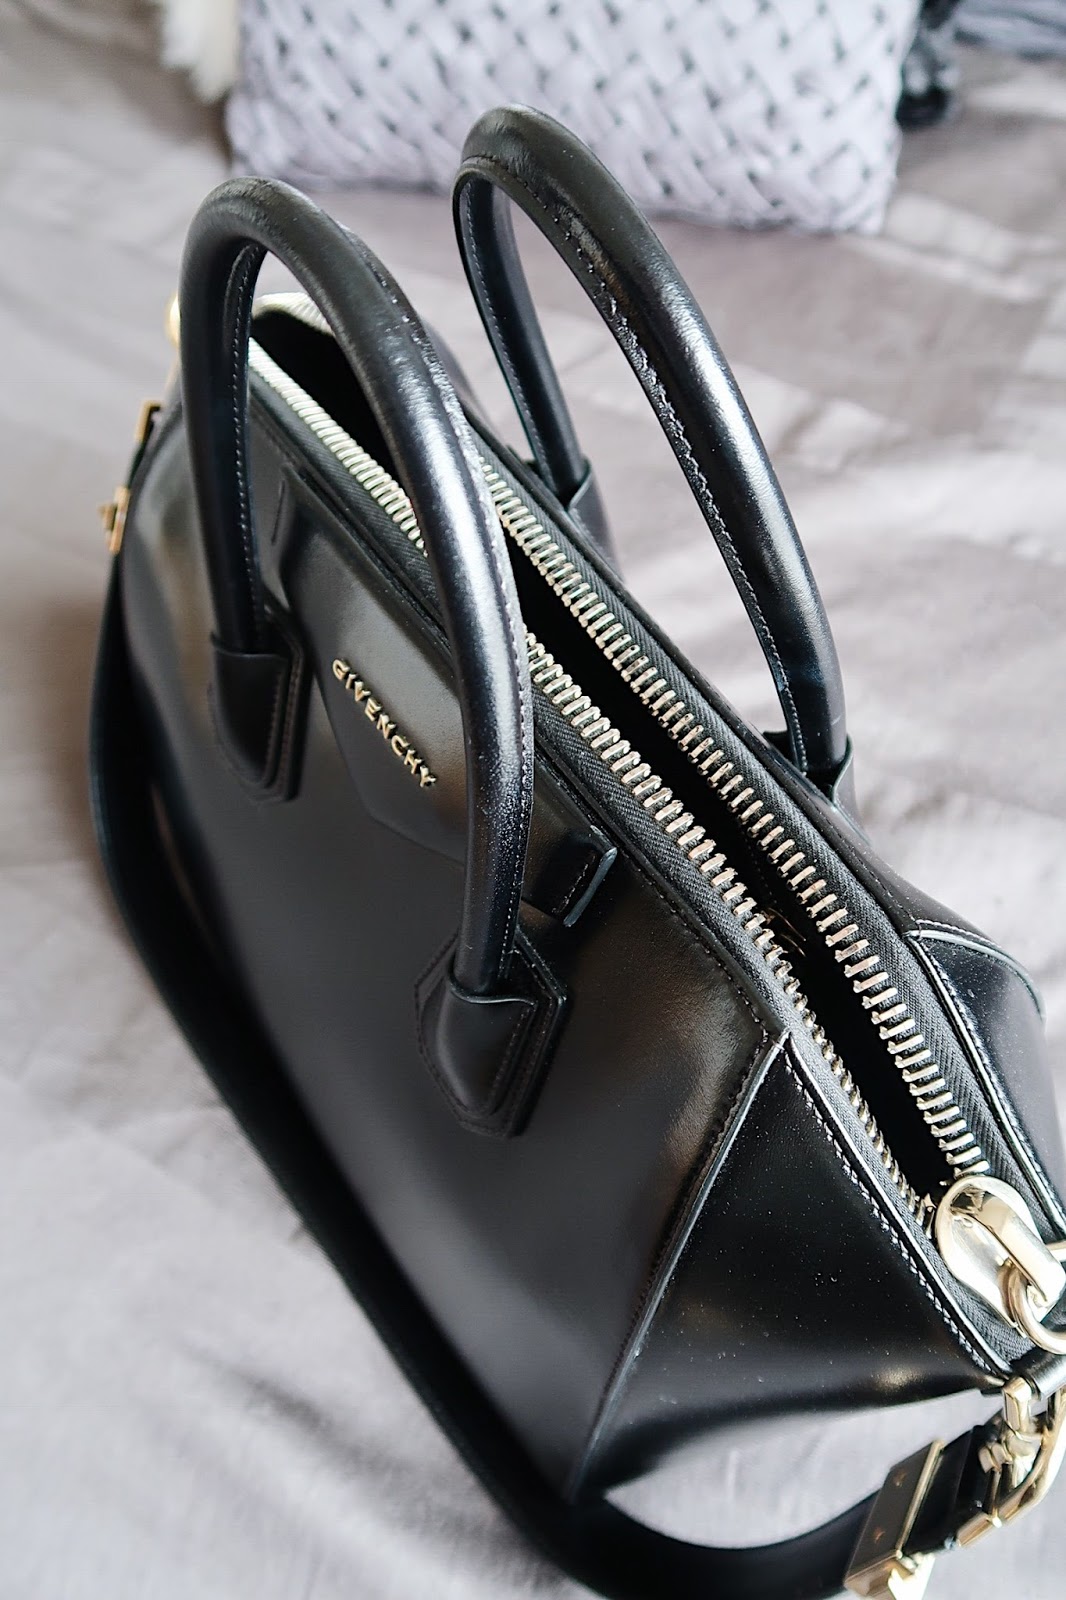 Review: Givenchy Antigona Leather Satchel - Elle Blogs